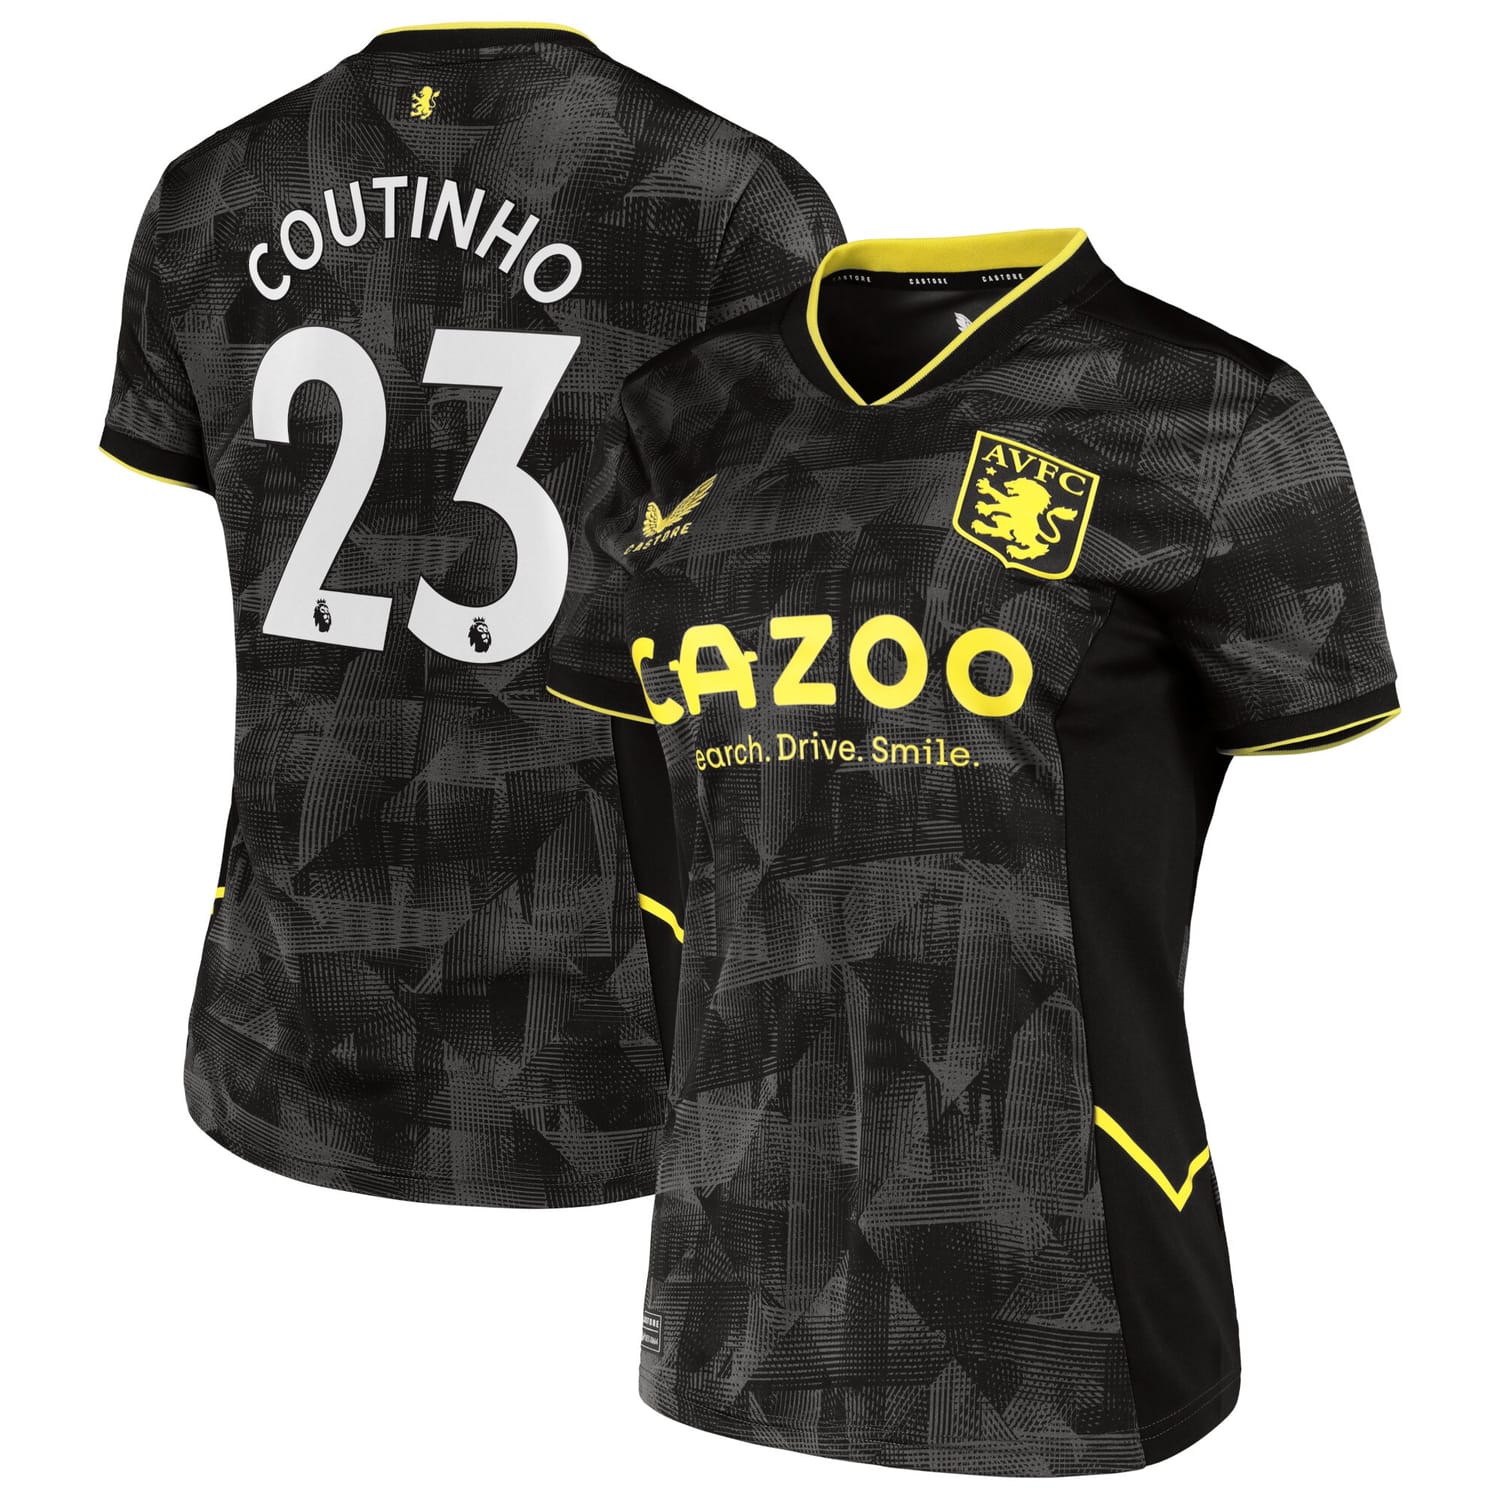 Premier League Aston Villa Third Jersey Shirt 2022-23 player Philippe Coutinho 23 printing for Women